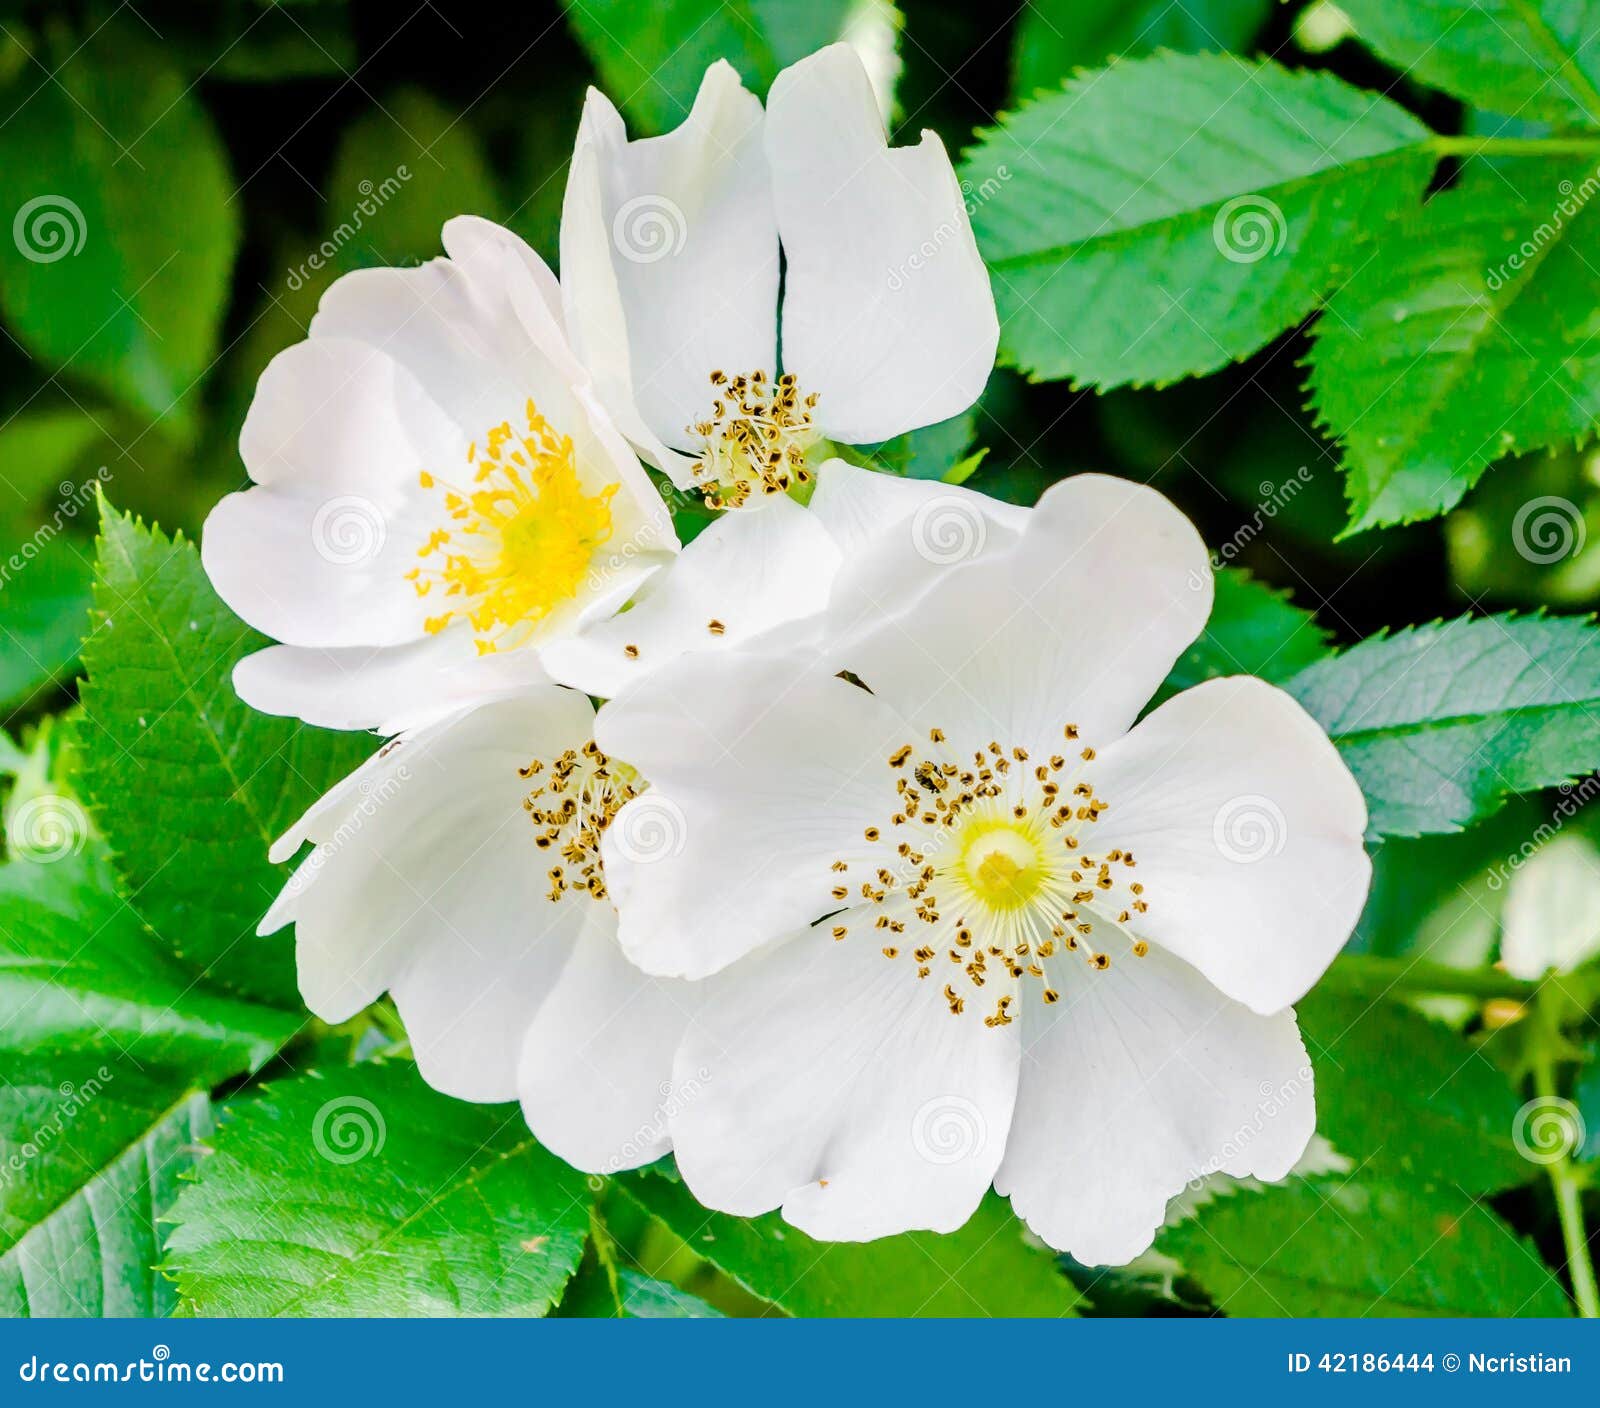 Wild White Rose Flowers, Green Bush Stock Photo - Image: 42186444